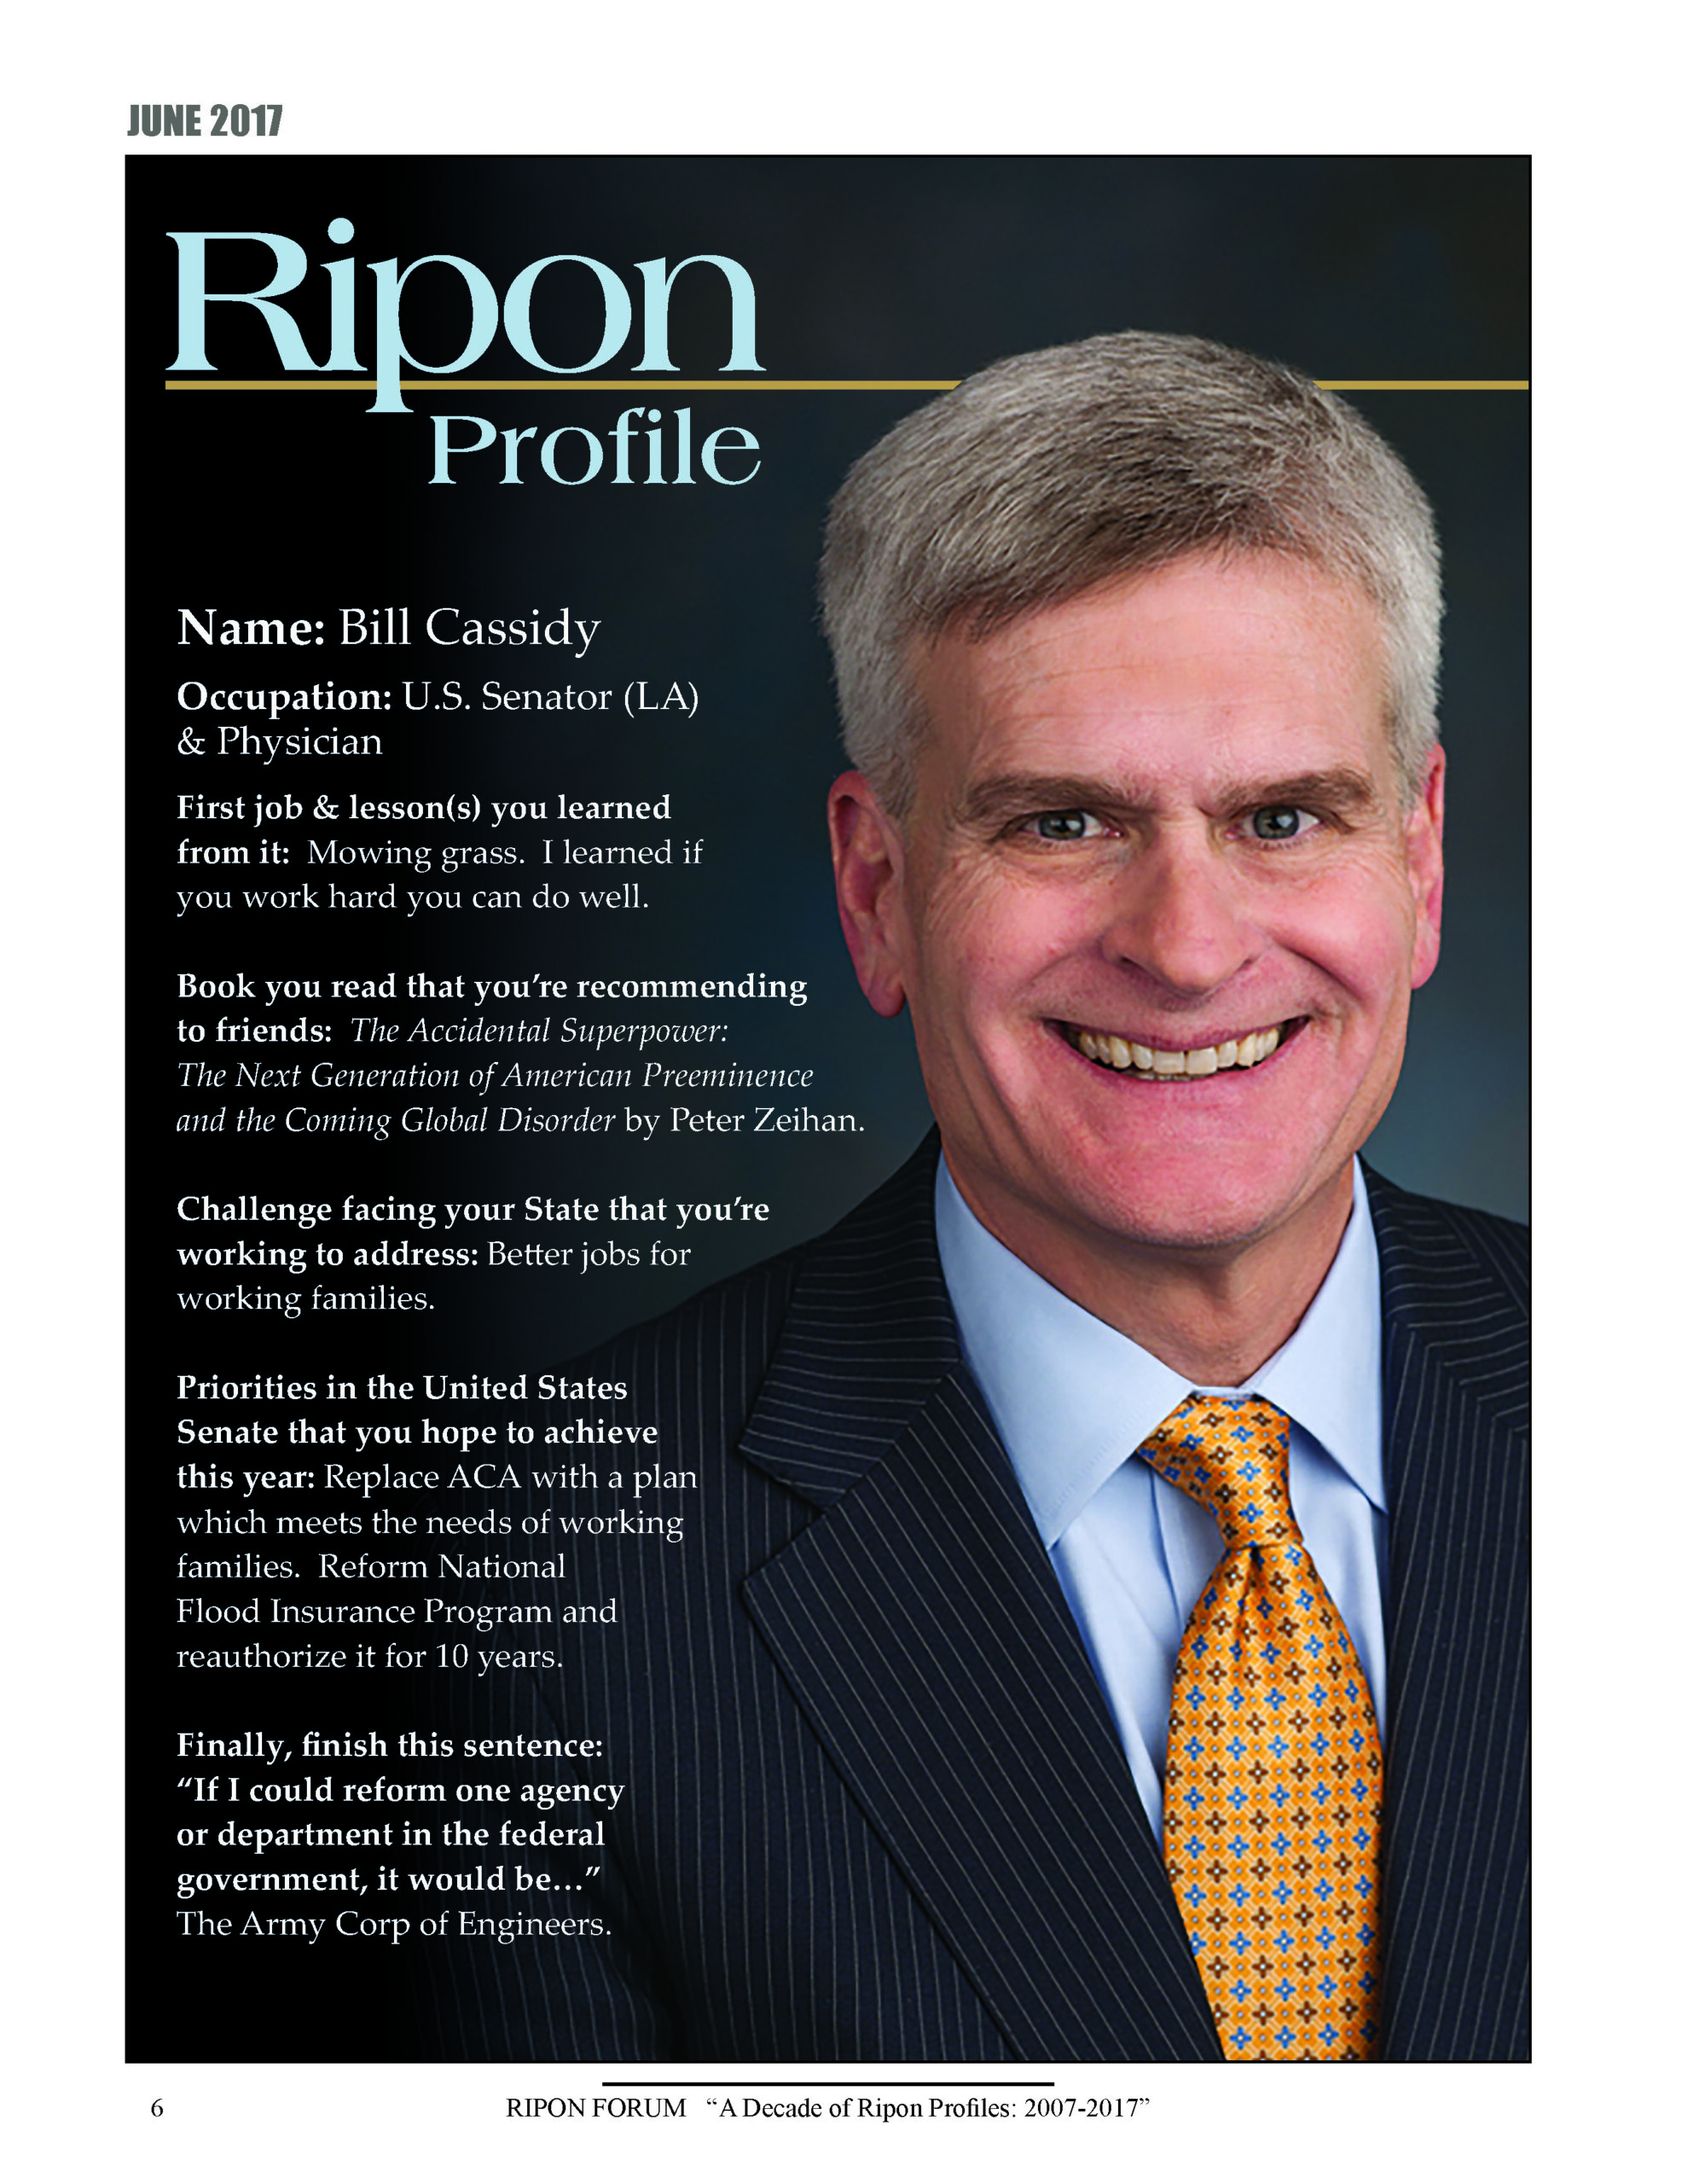 Ripon Profile of Bill Cassidy